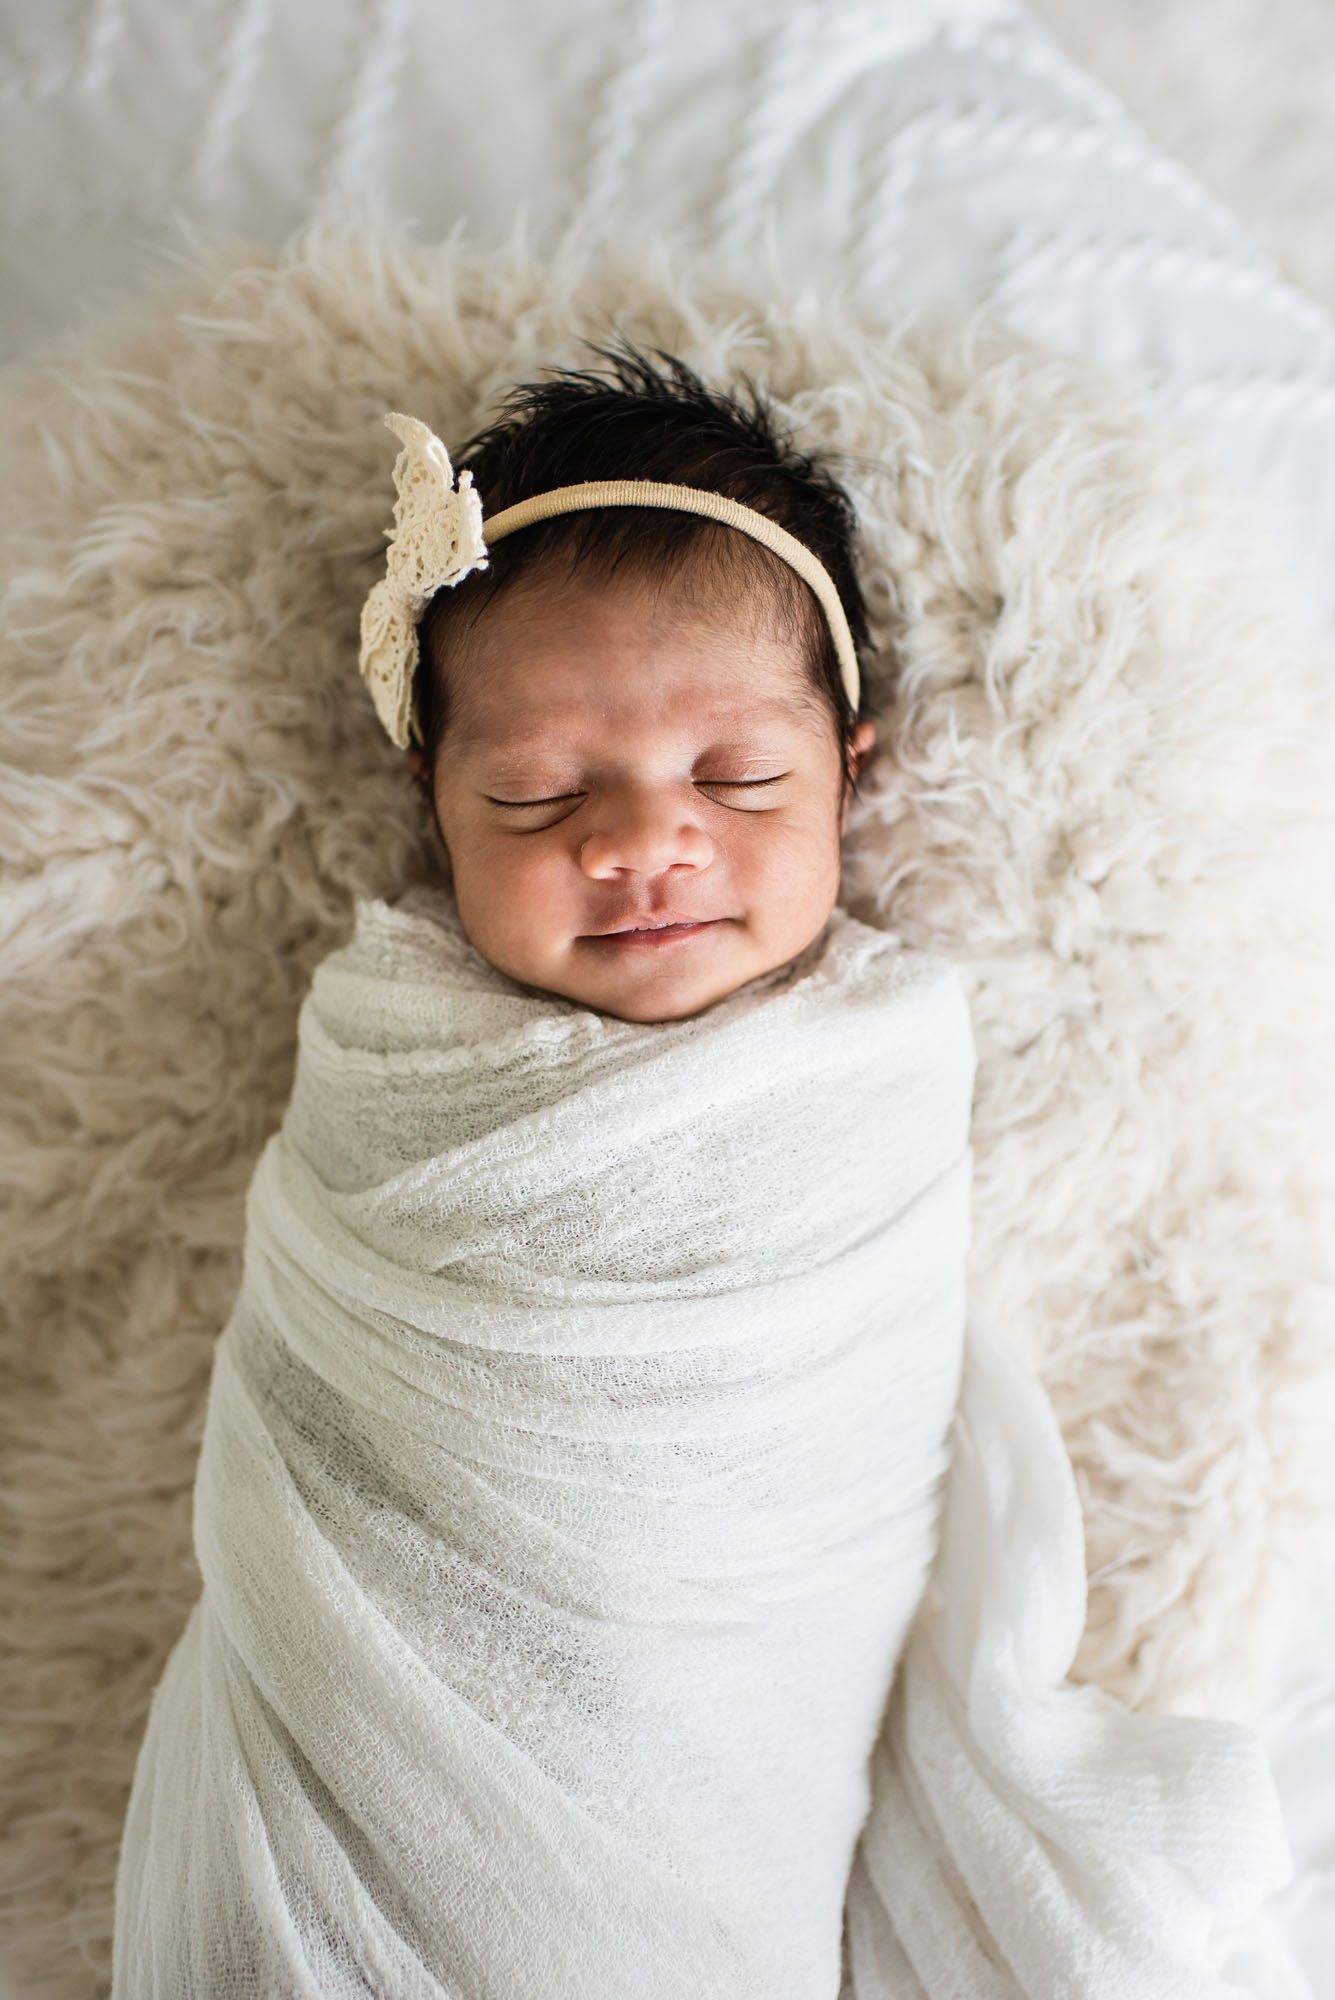 Newborn baby smiling in basket asleep, San Antonio Newborn Photographer